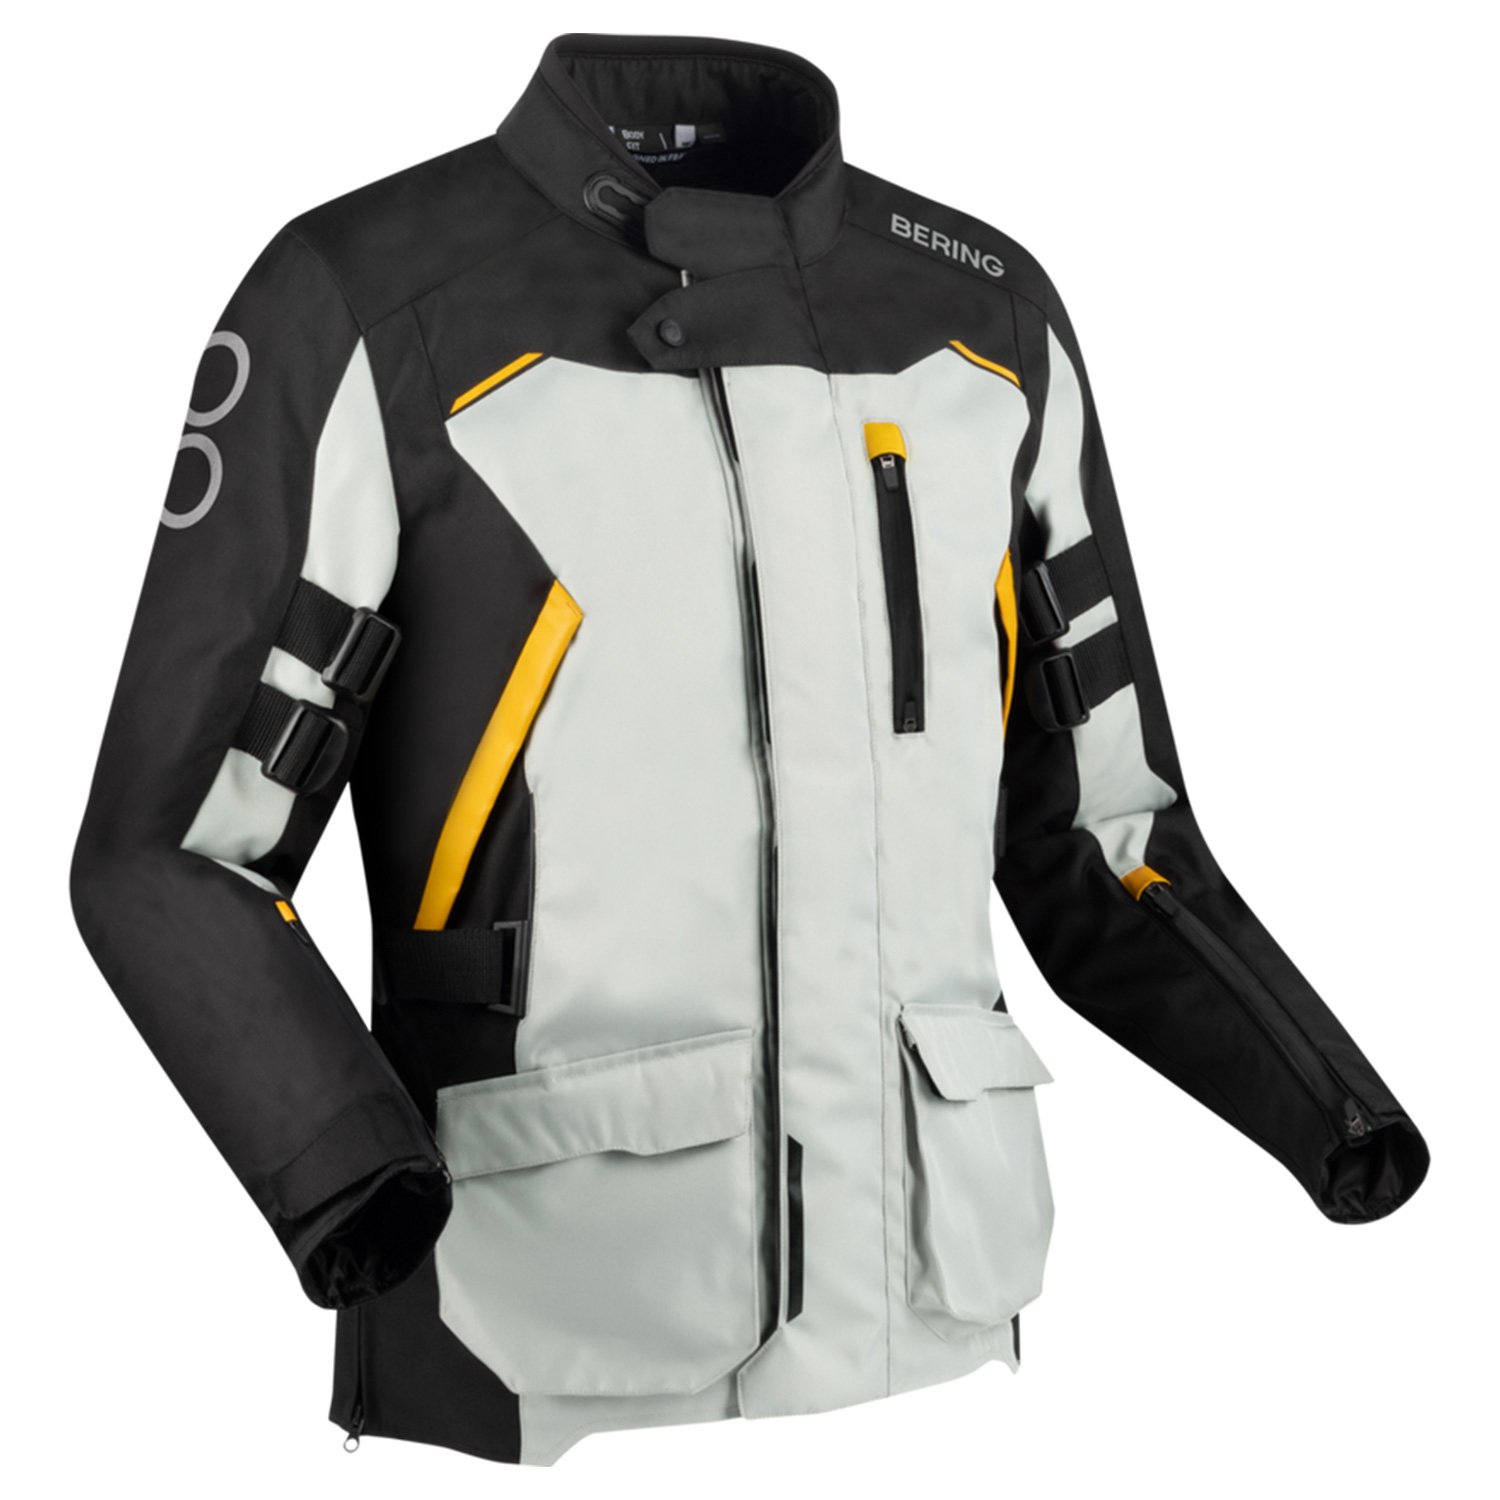 Image of Bering Zephyr Jacket Black Grey Yellow Size 2XL ID 3660815181119